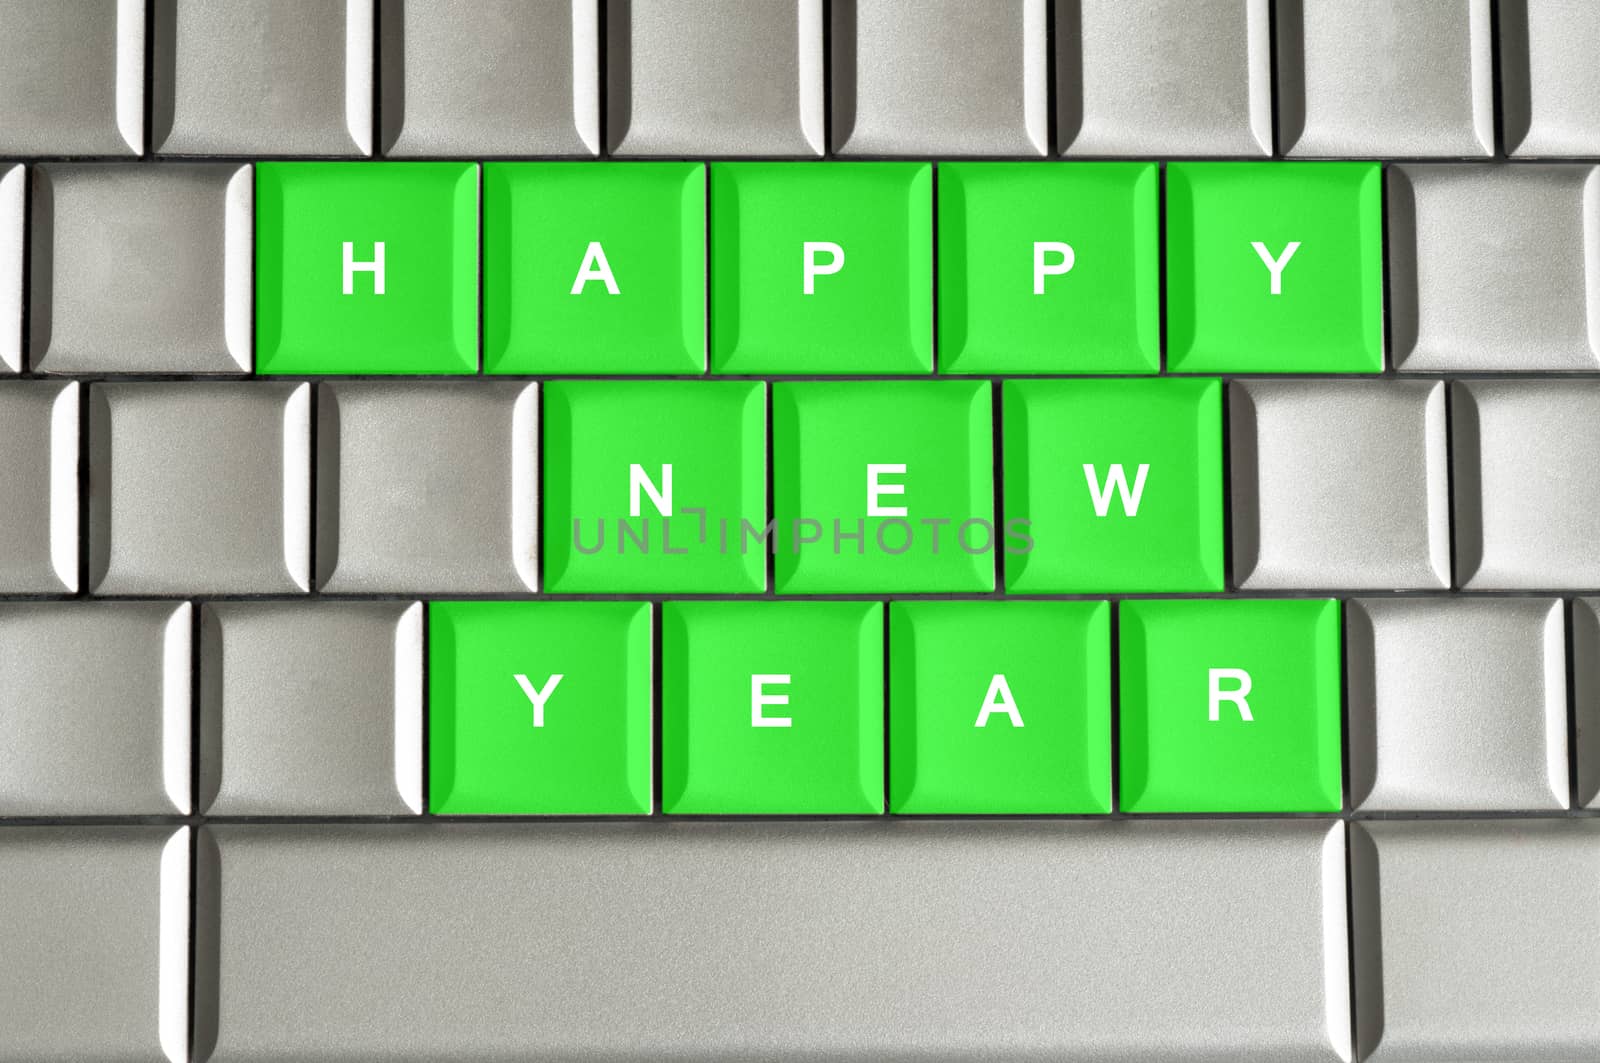 Happy New Year  spelled on a metallic keyboard by daoleduc